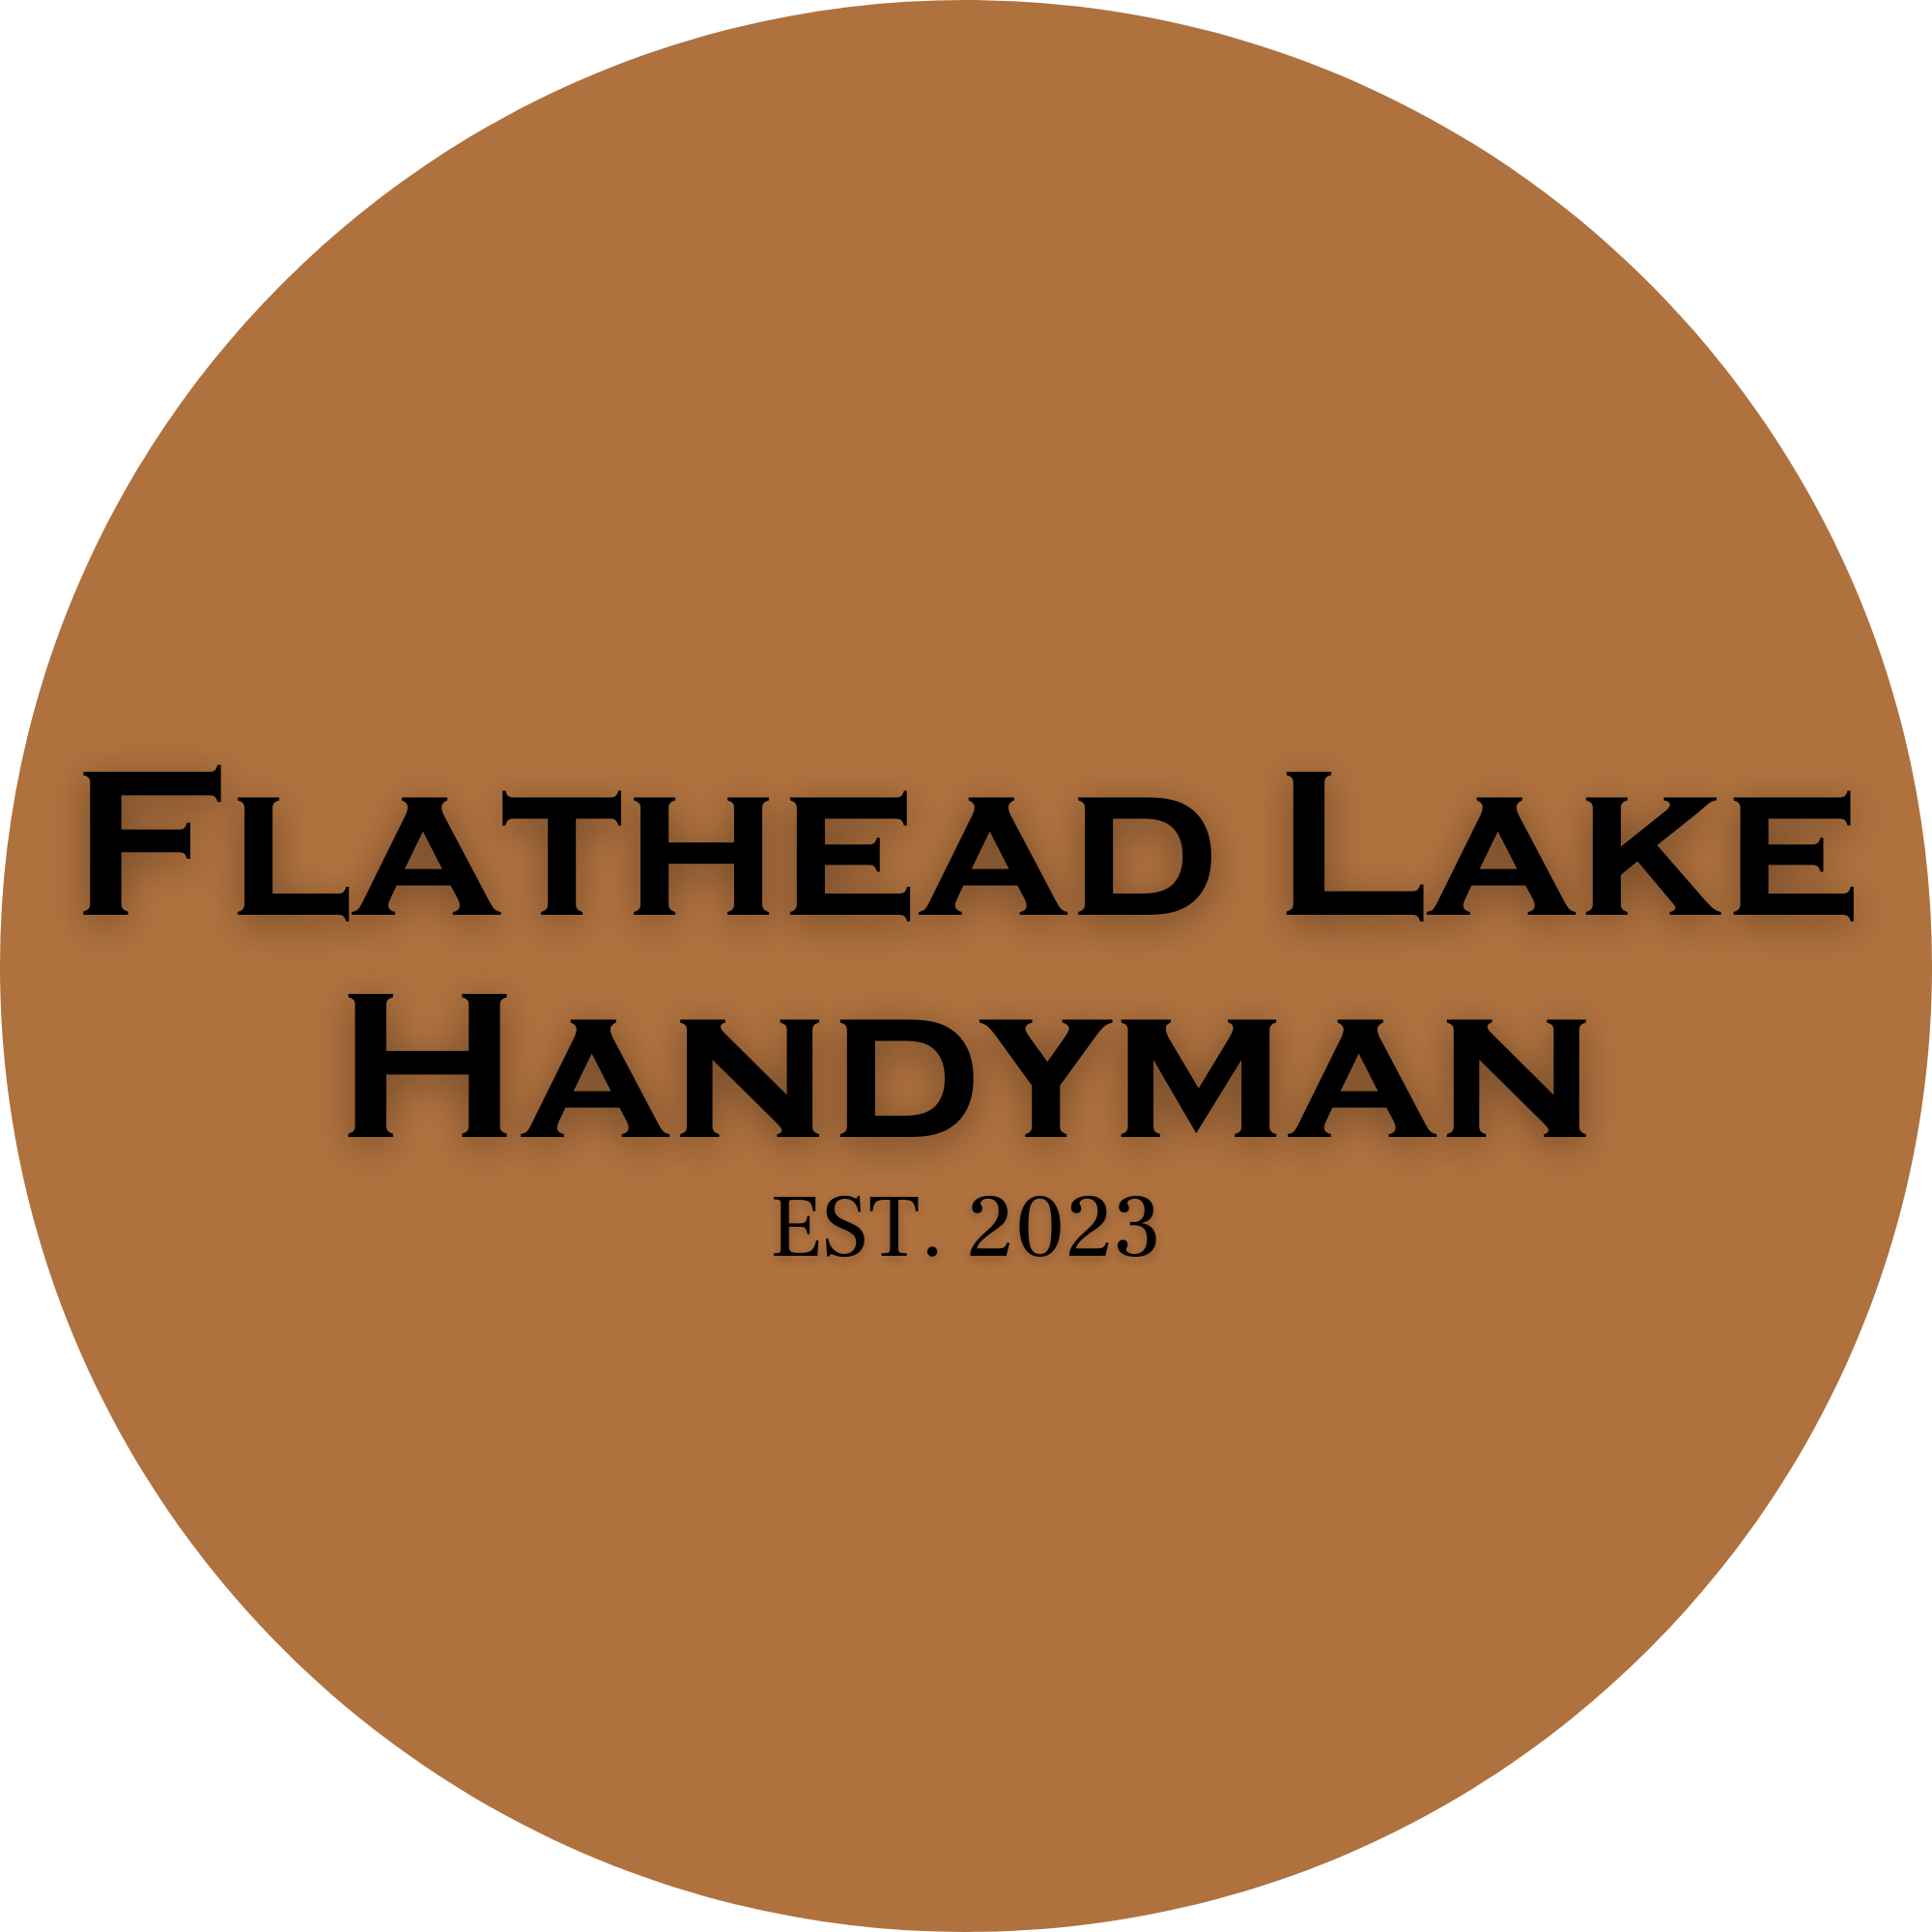 Flathead Lake Handyman LLC